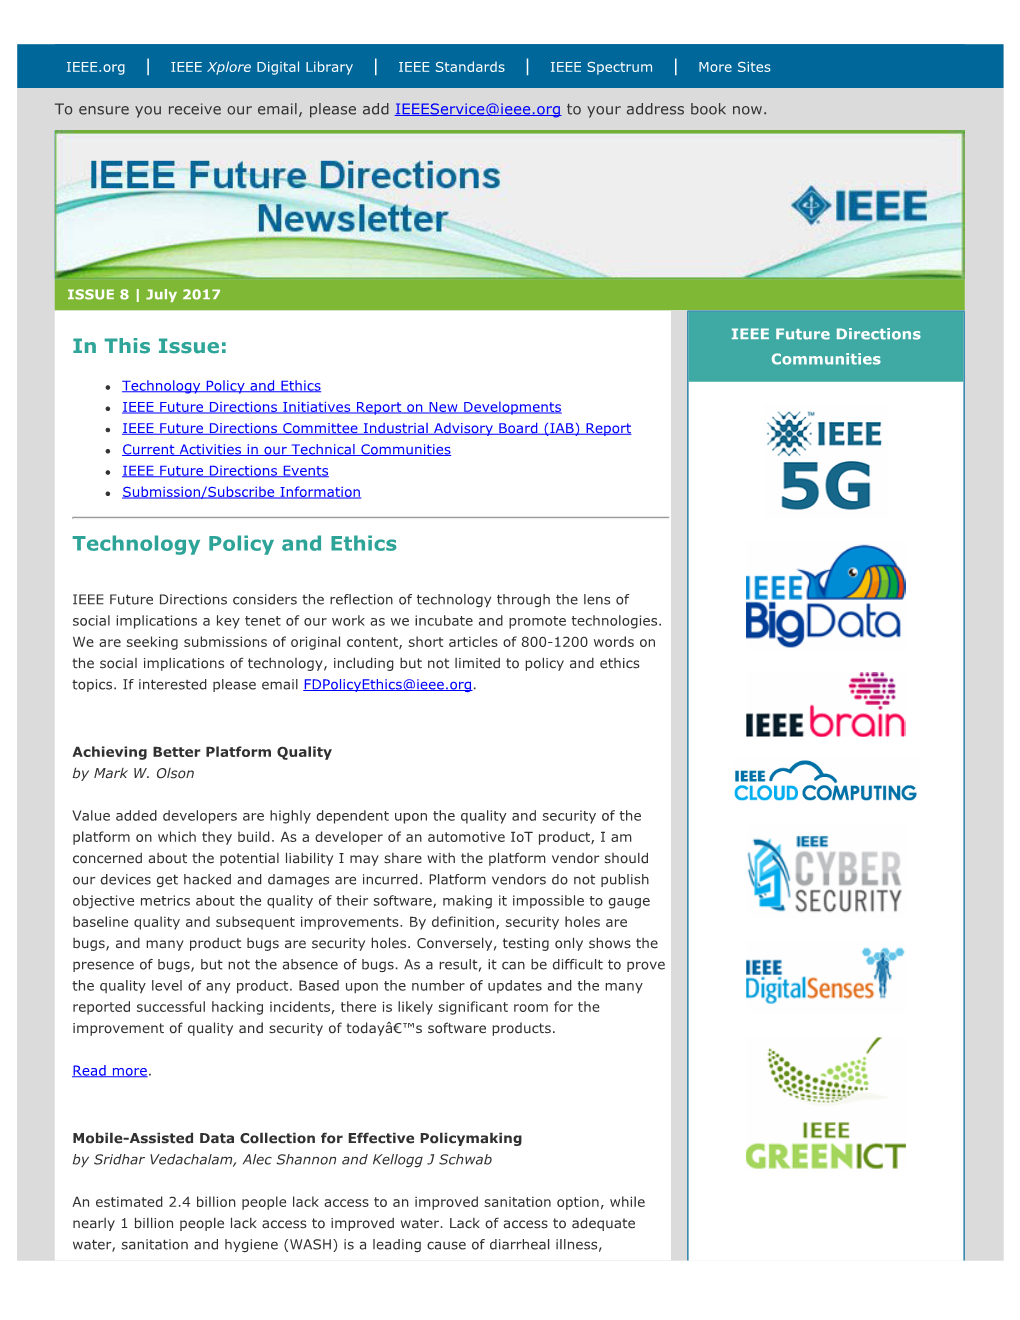 IEEE Future Directions Newsletter